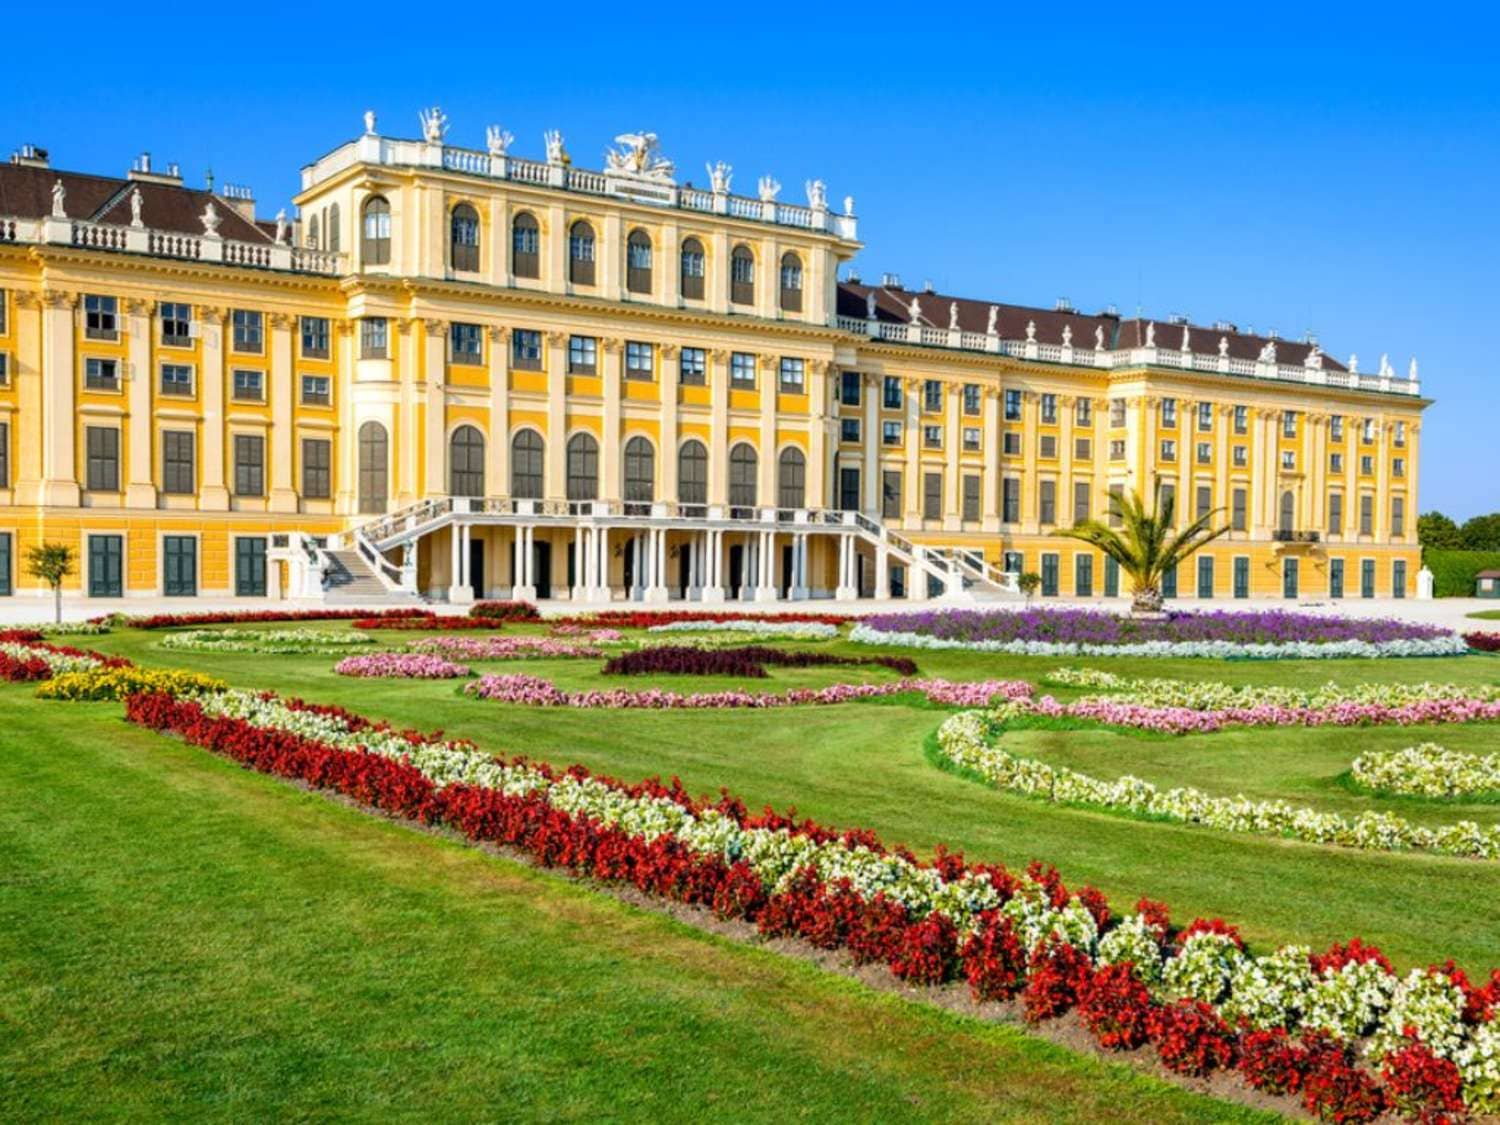 Arrival in Vienna and Schönbrunn Palace